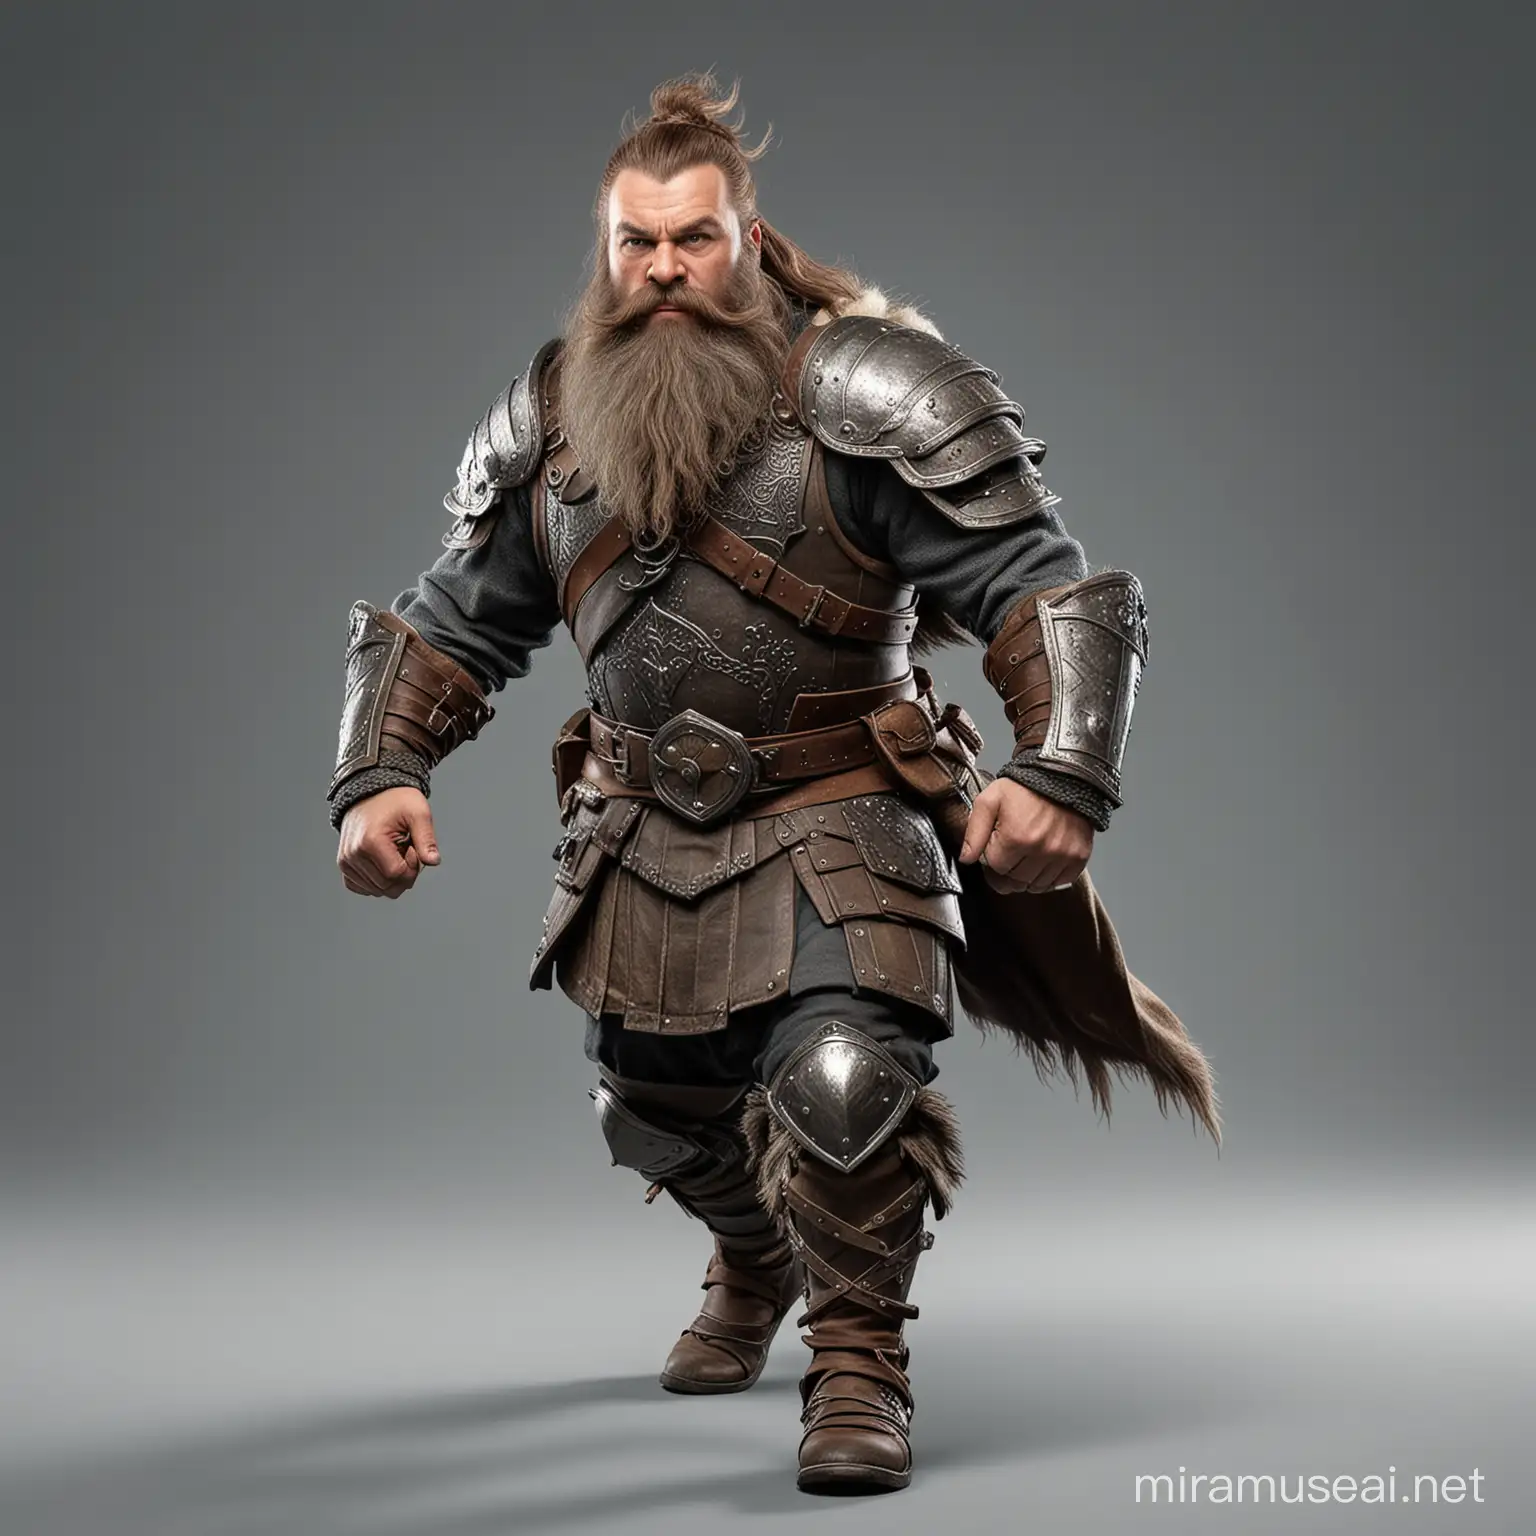 Fantasy medieval dwarf warrior in armour full body running side profile